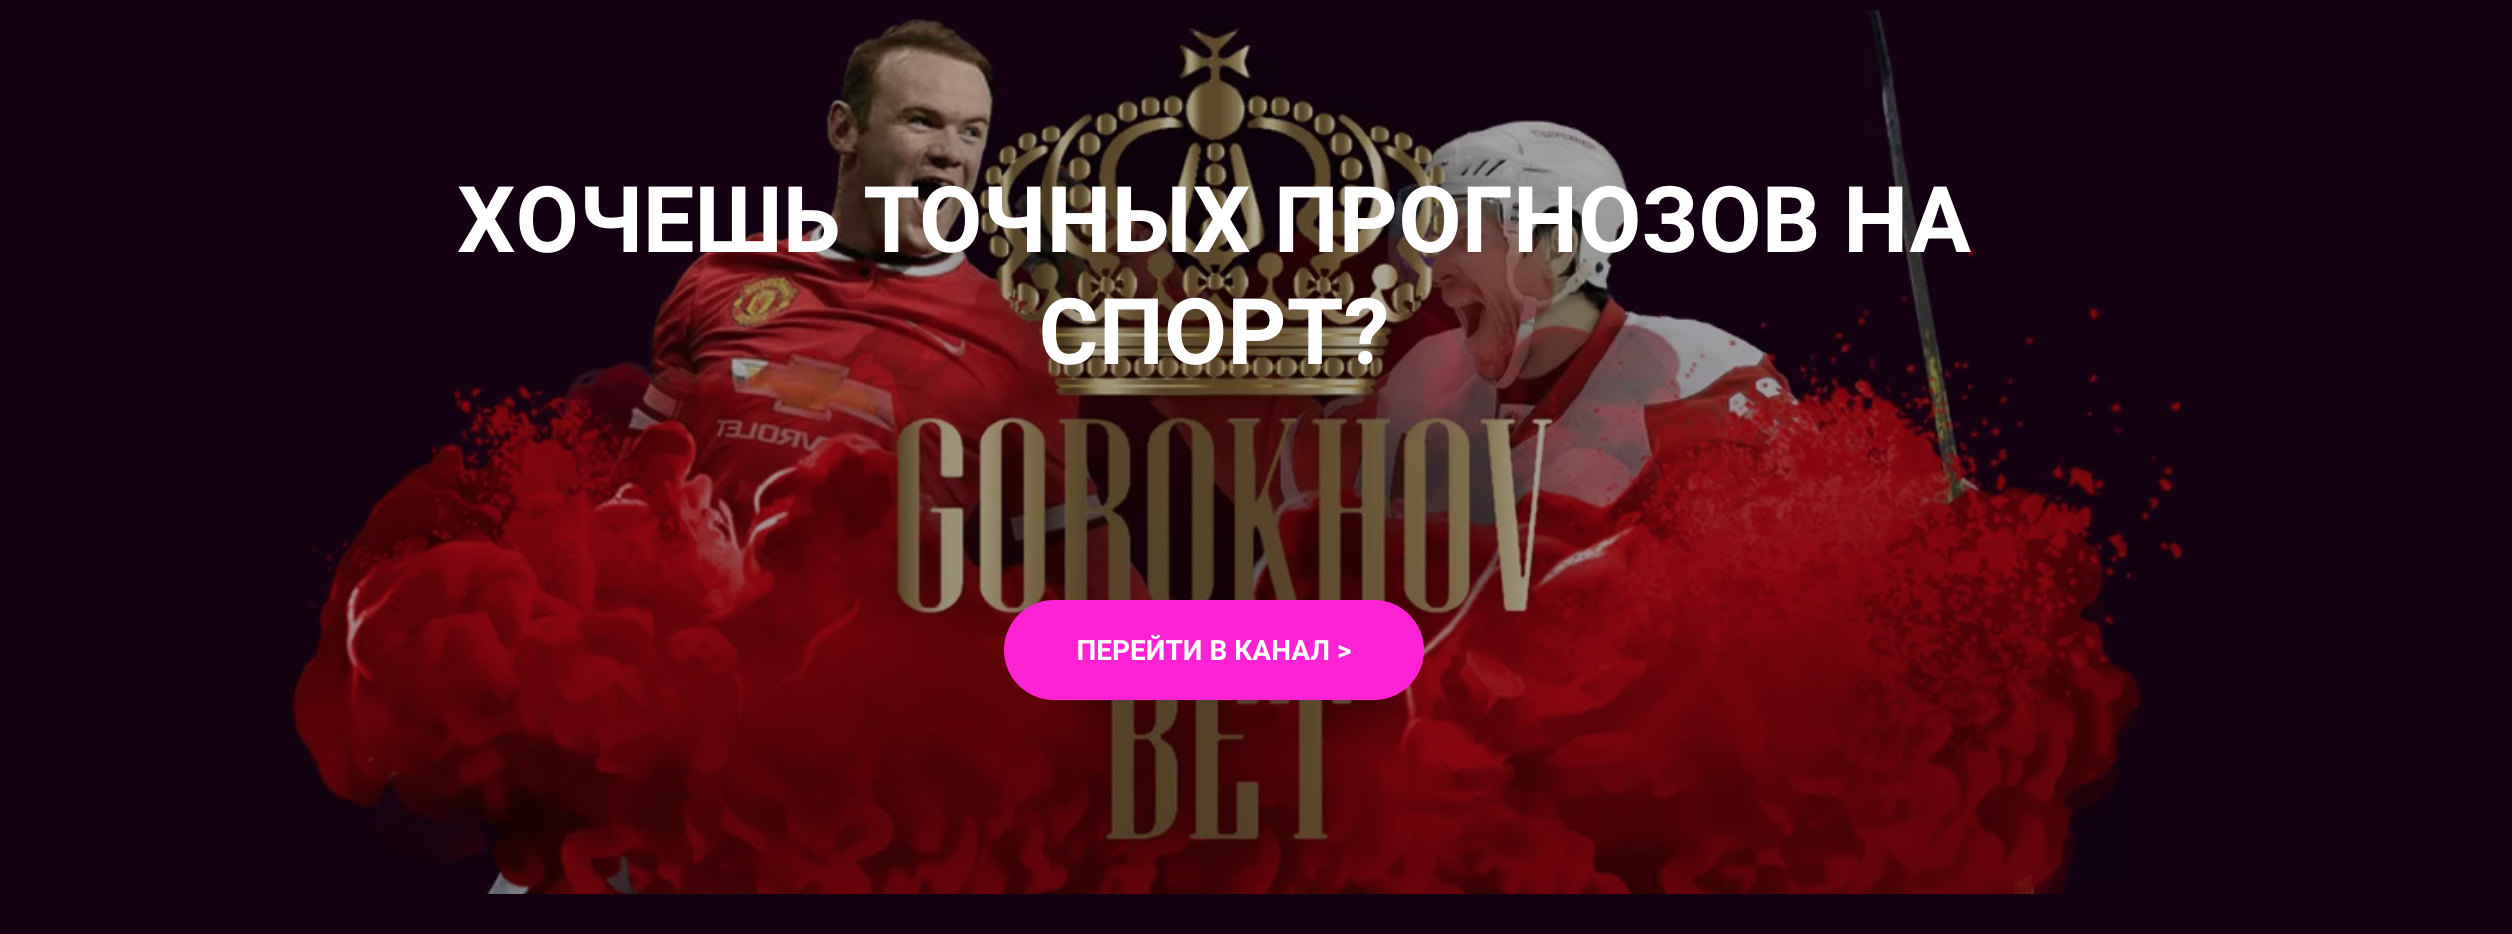 Главная страница сайта Ивана Горохова (IVAN GOROKHOV)